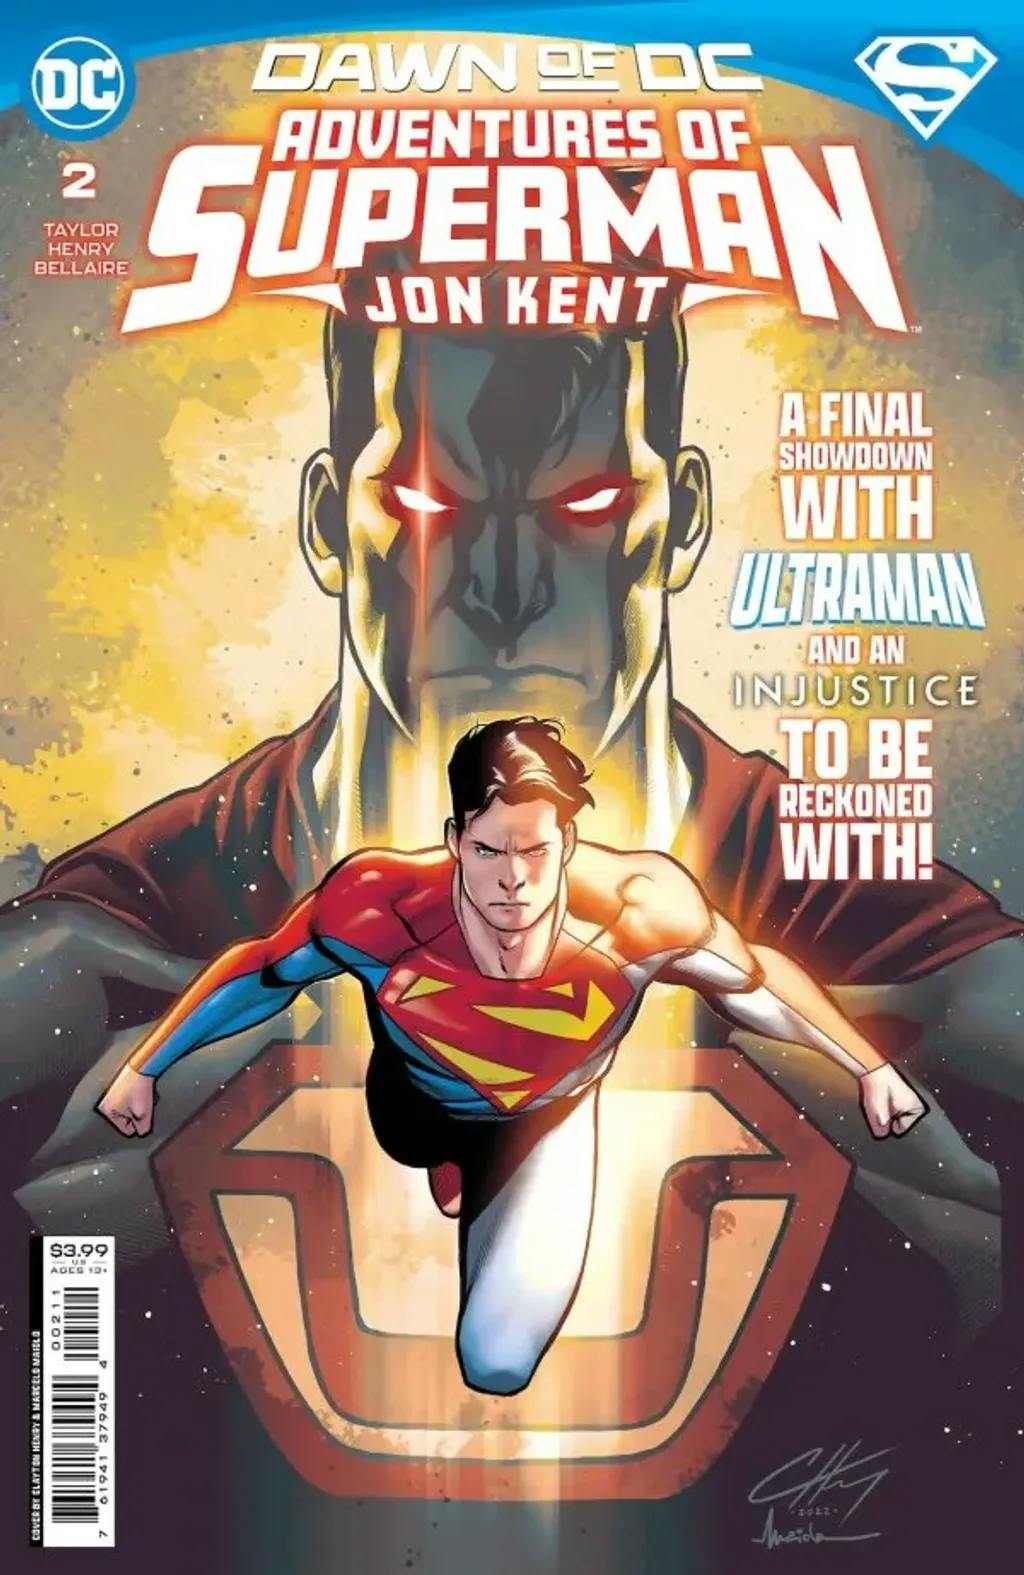 Adventures of Superman: Jon Kent #2 By Tom Taylor, Clayton Henry, and Jordie Bellaire